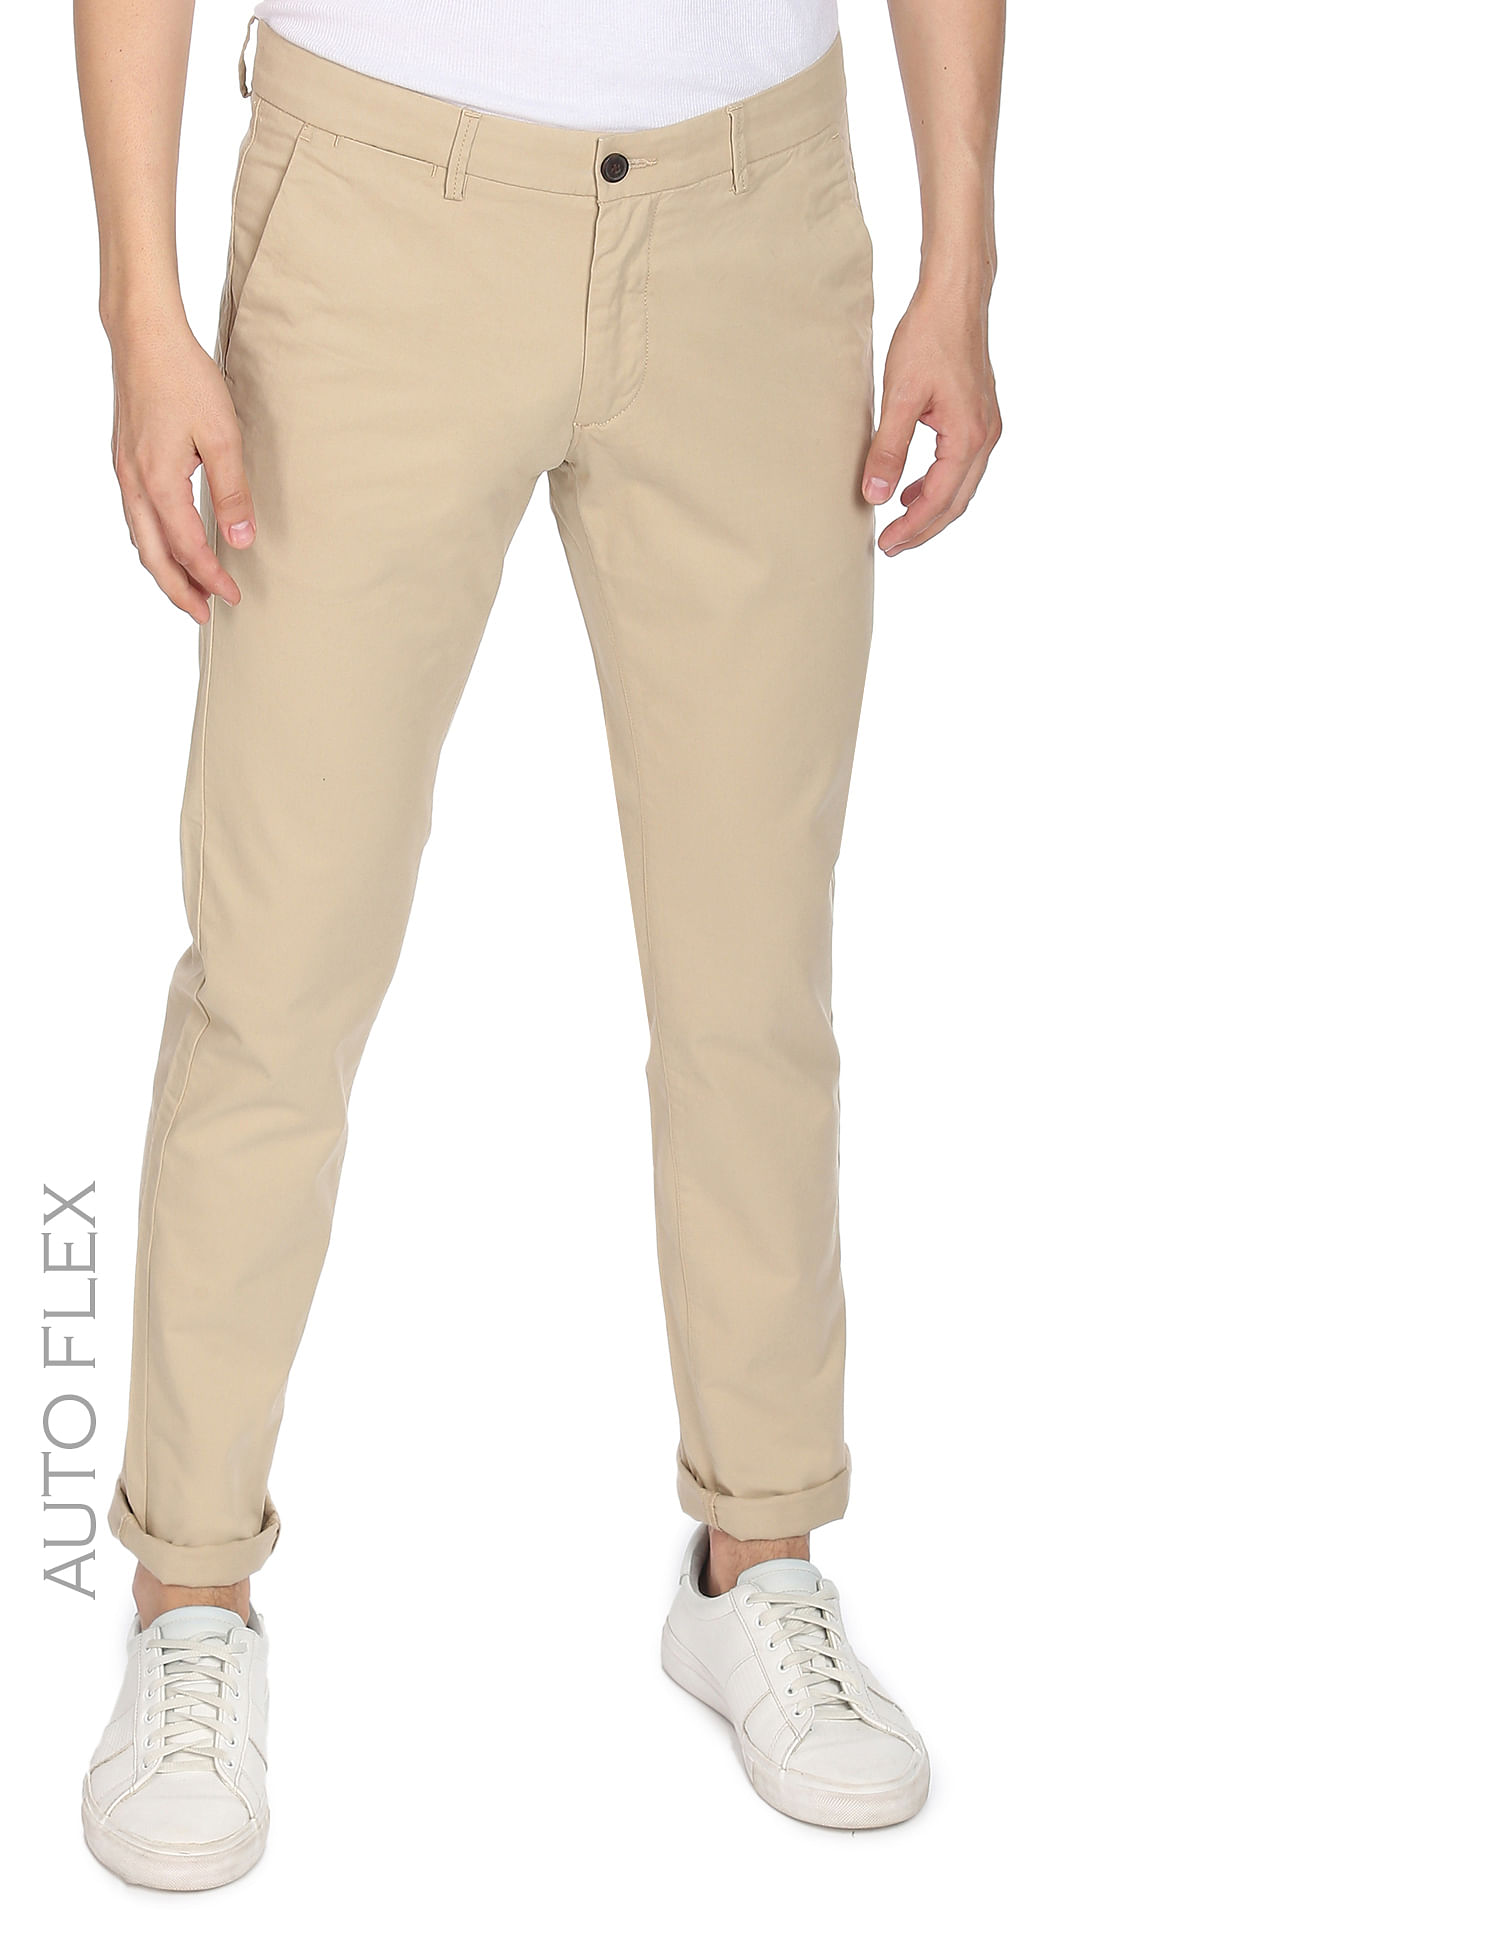 PANTS CUFF CORE Sports brushed fleece trousers - Men - Diadora Online Store  US